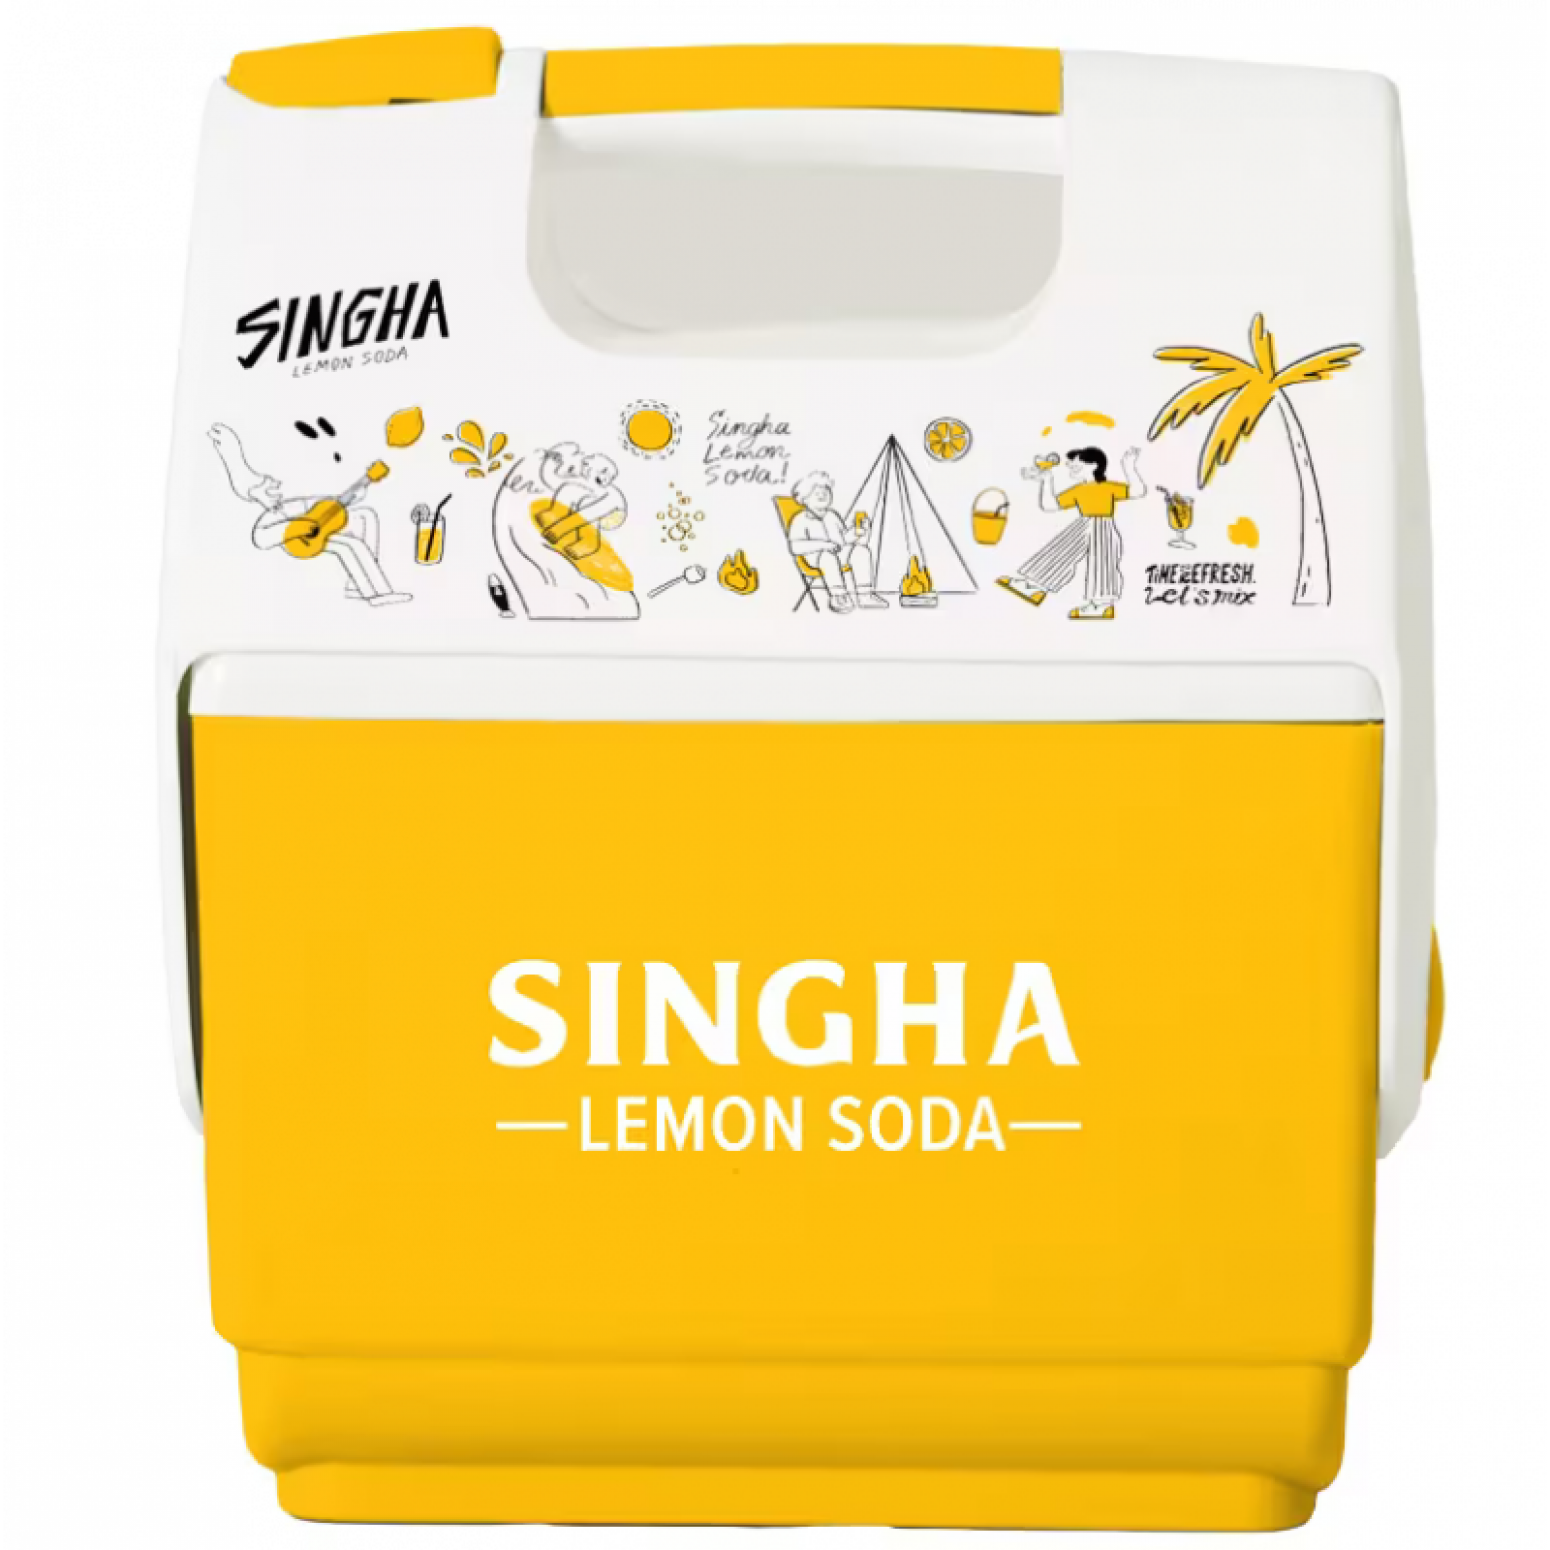 Singha Lemon Soda canteen 330ml. Pack4